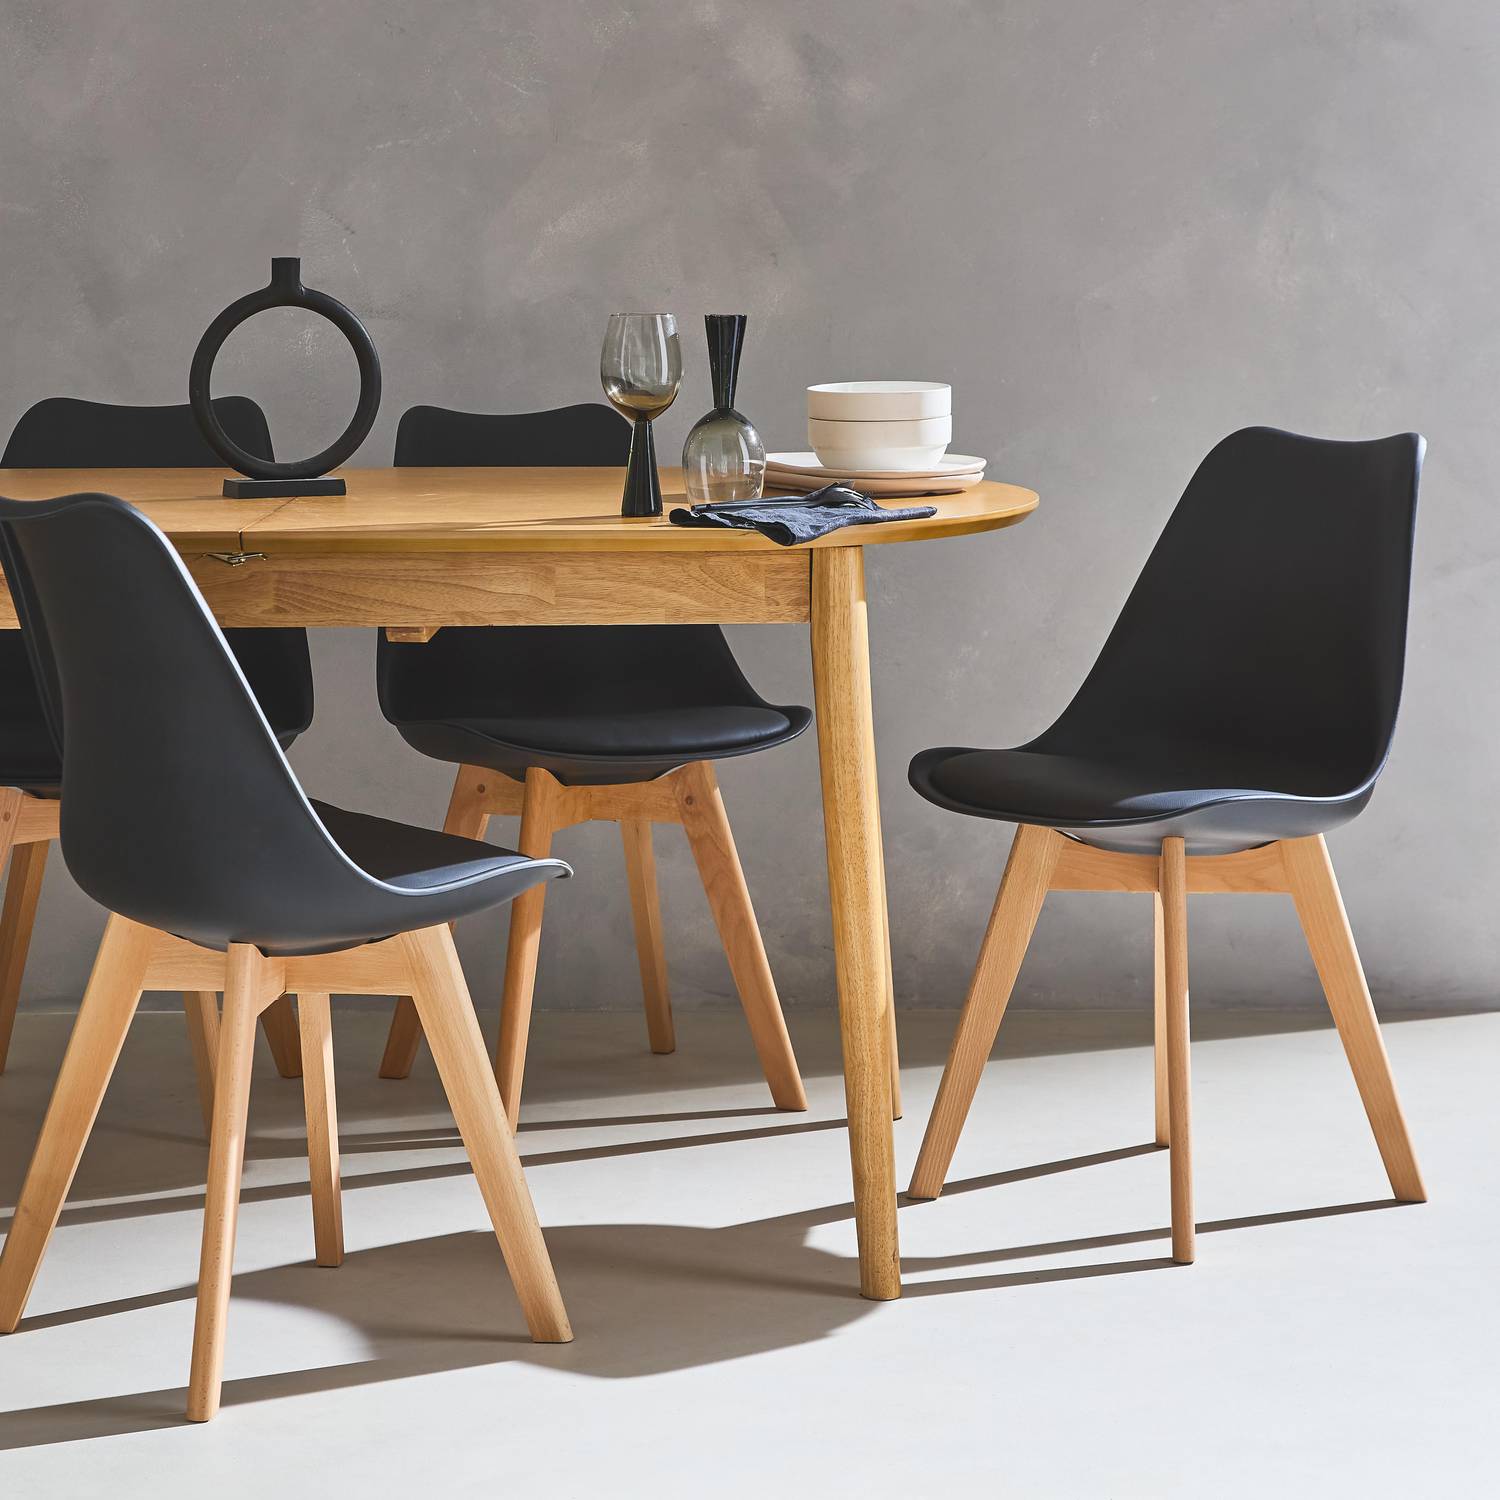 Set of 4 Scandinavian chairs, beechwood legs, 1-seater chair, black Photo1